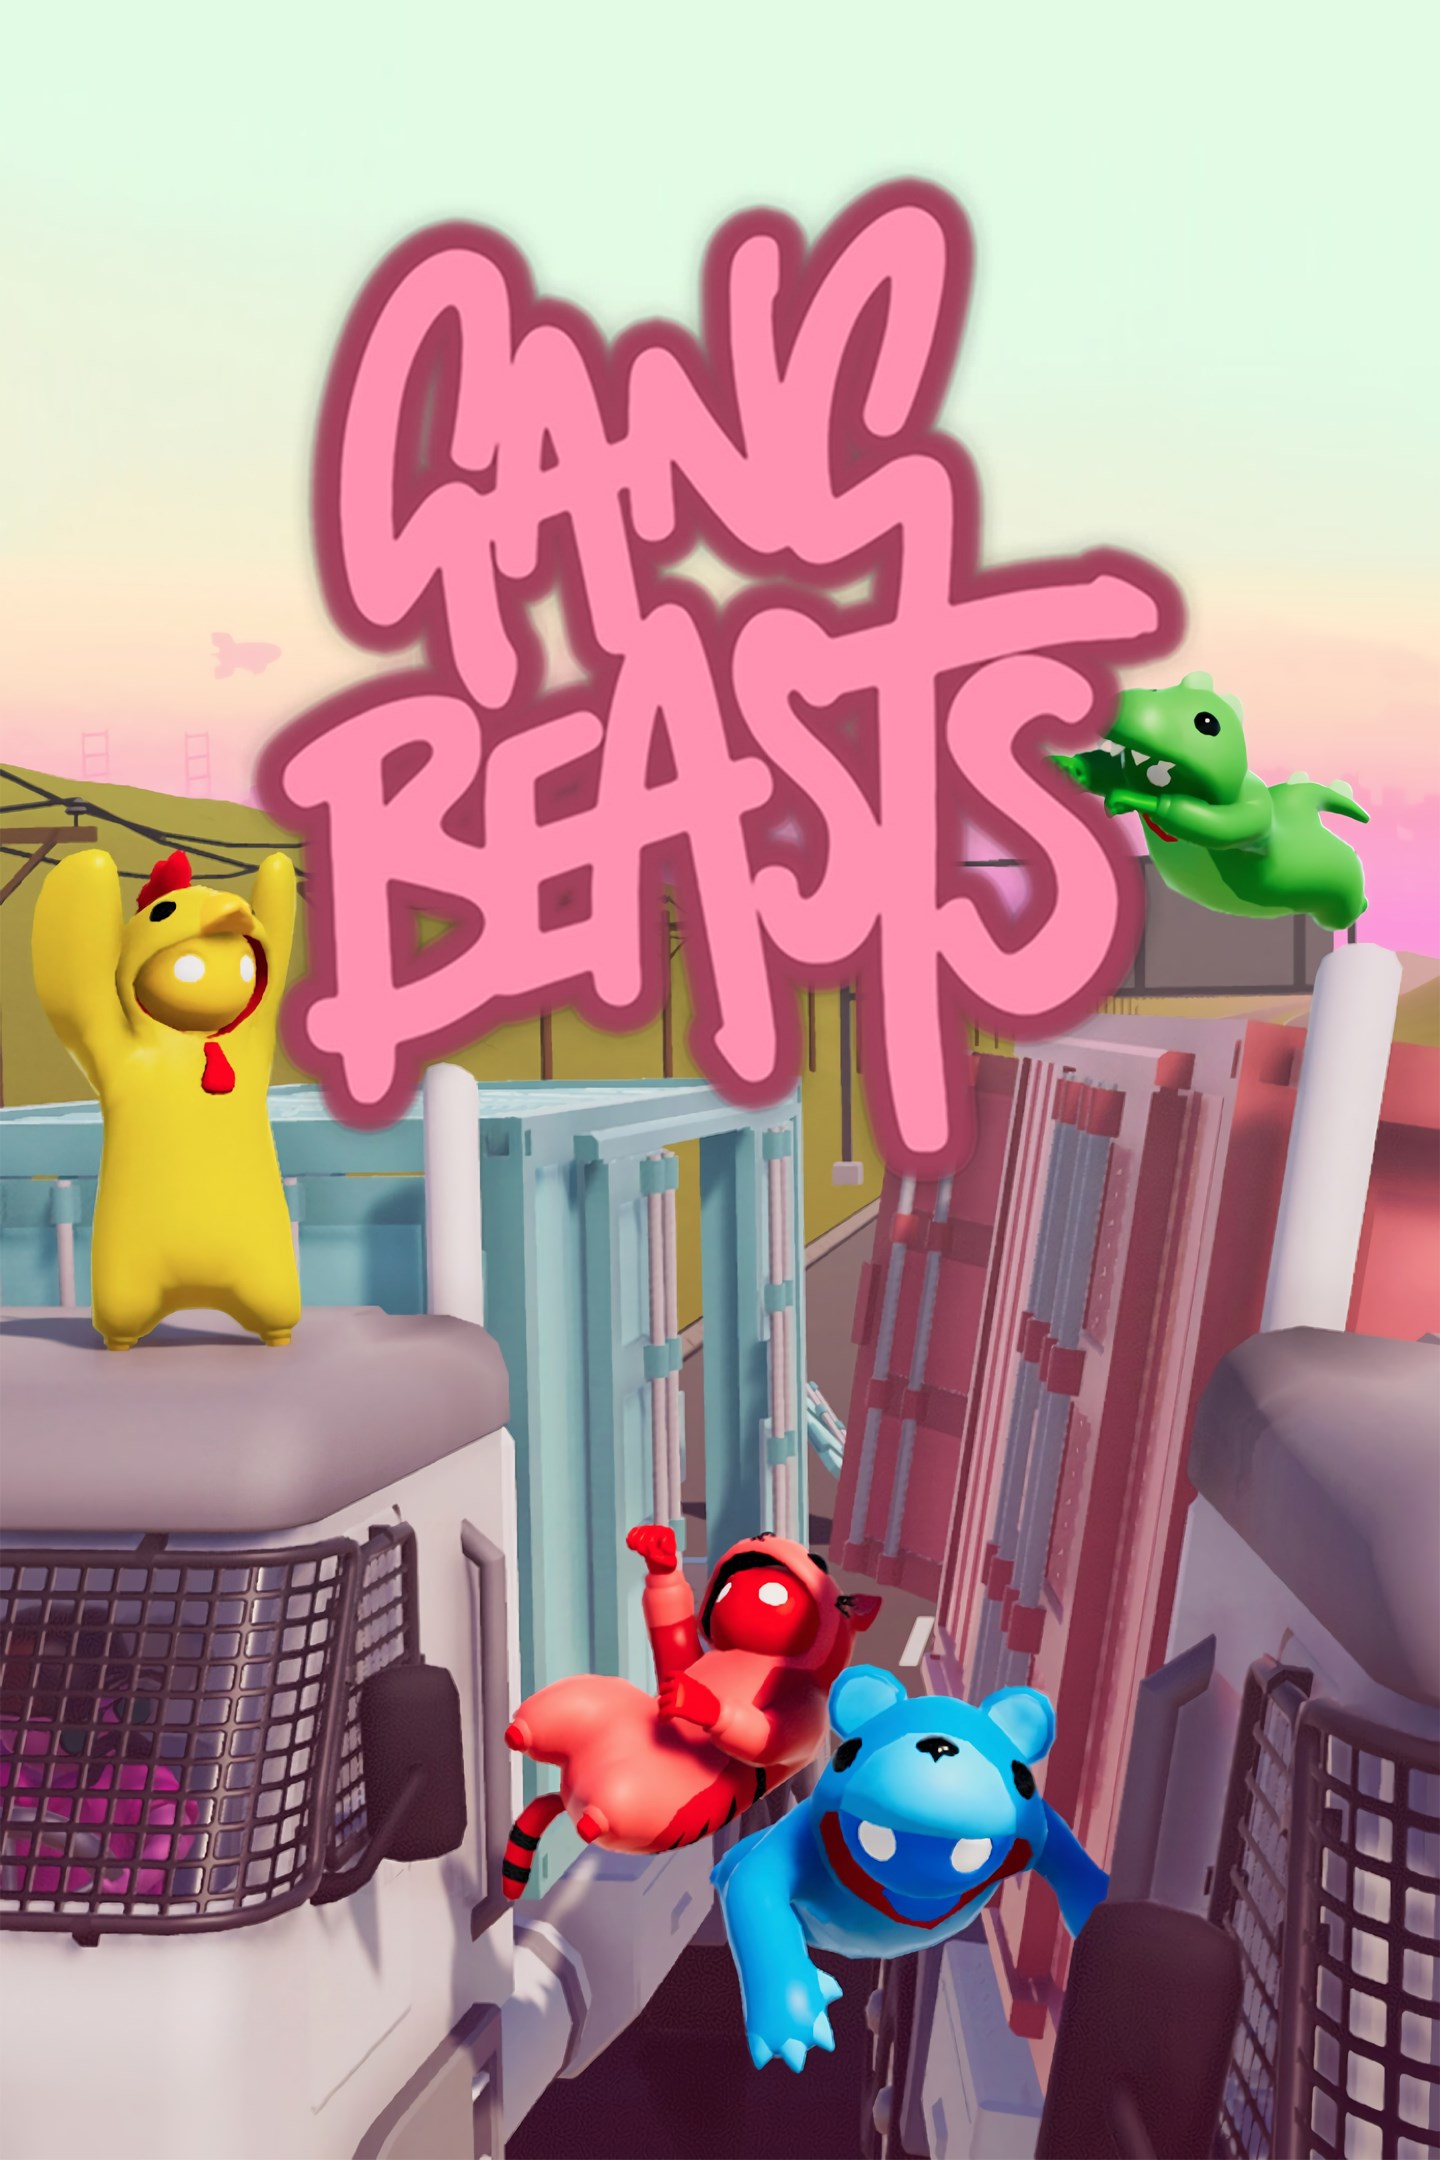 Play Gang Beasts | Xbox Cloud (Beta) on Xbox.com